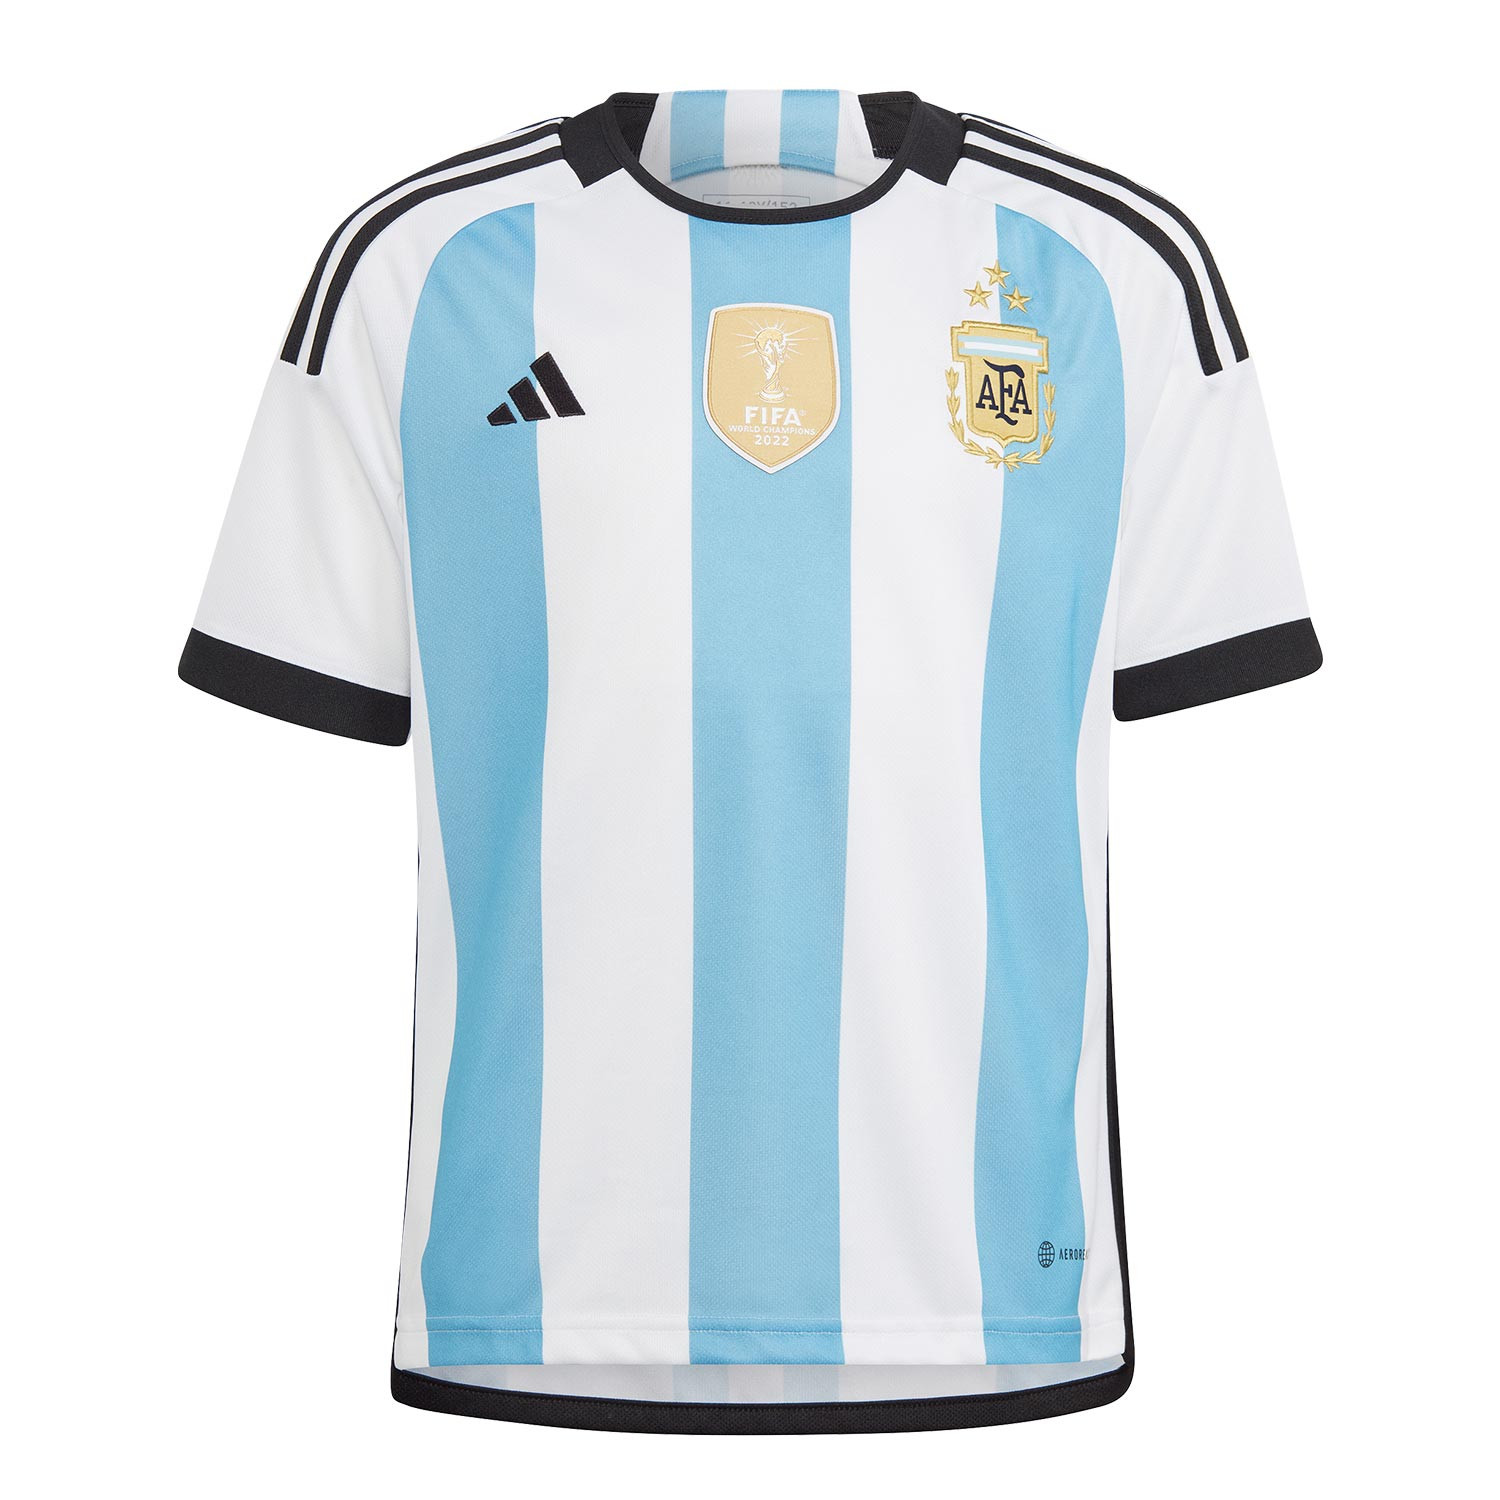 madre Familiarizarse Plano Camiseta adidas Argentina niño 3 estrellas albiceleste|futbolmaniaKids